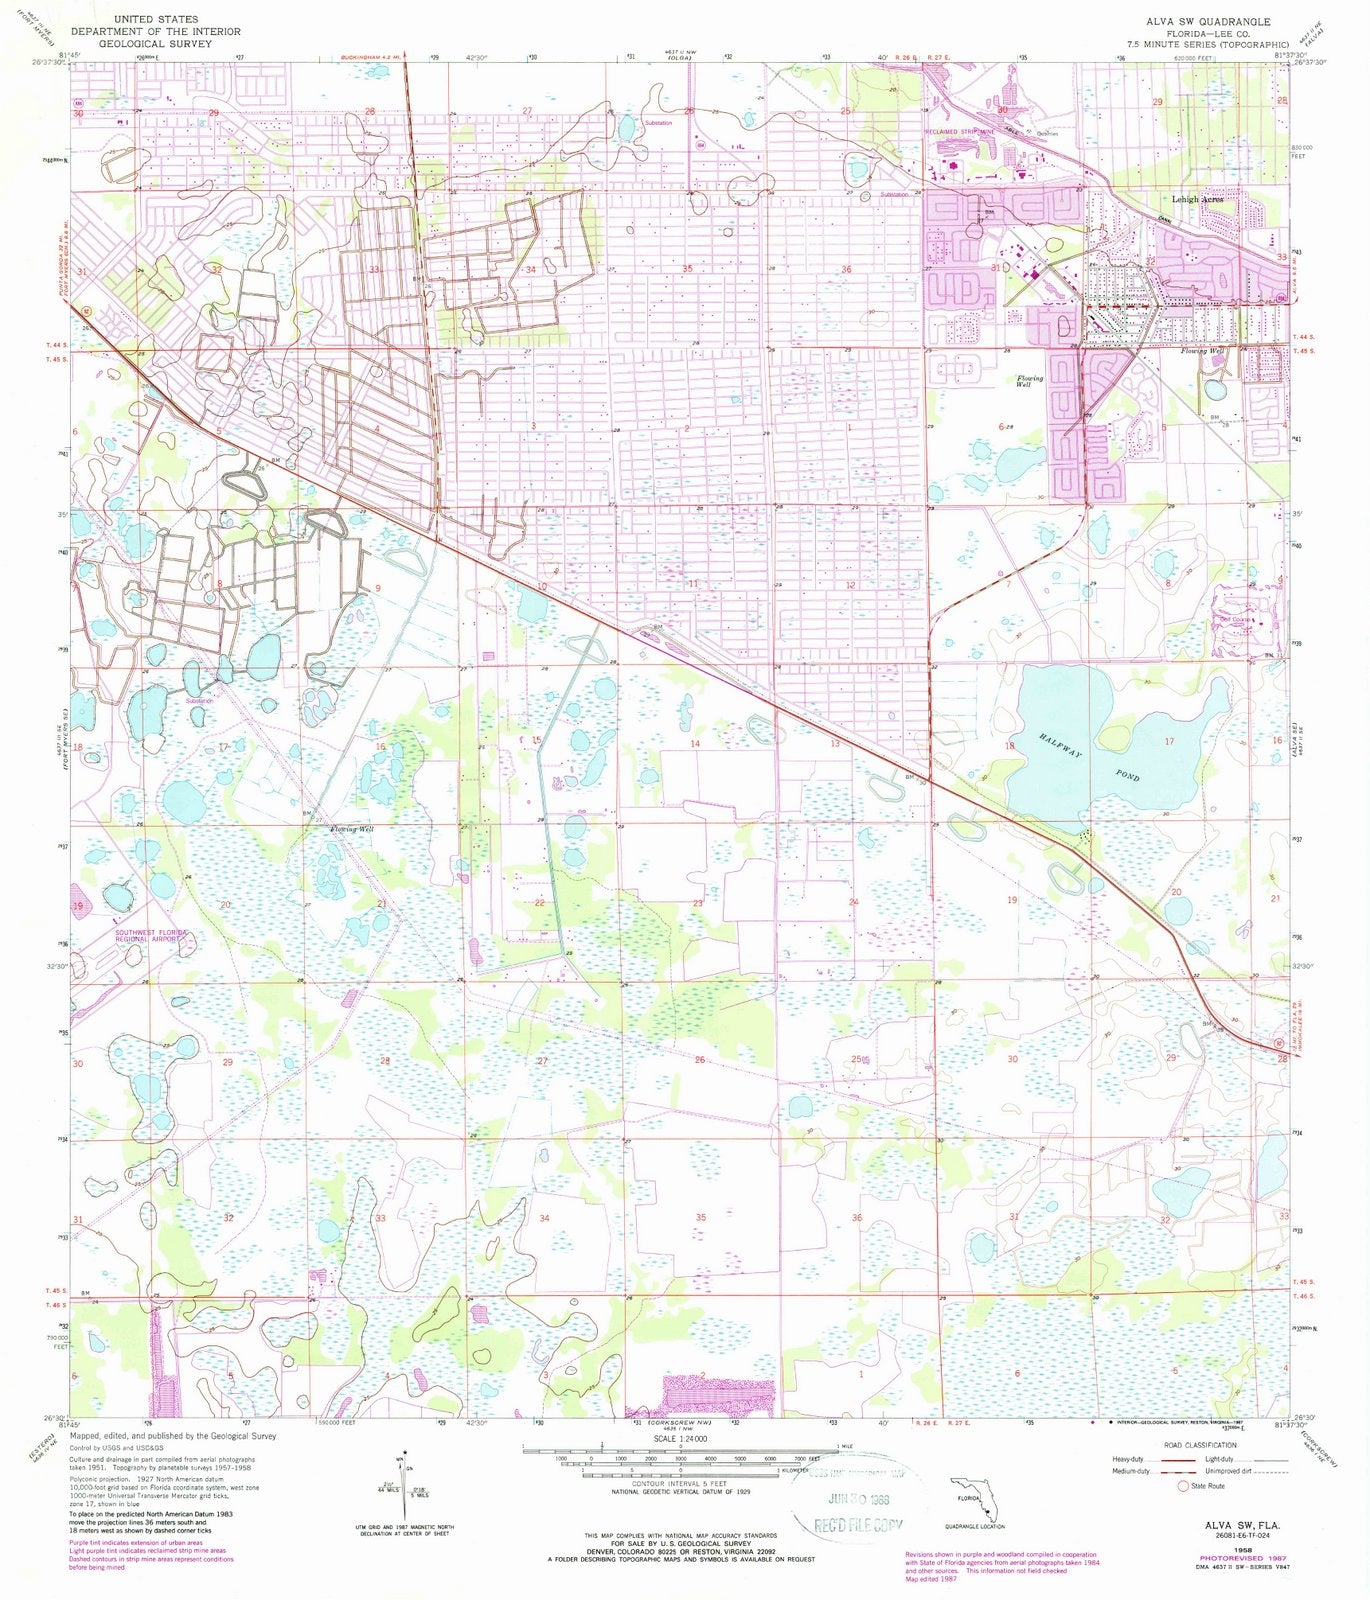 1958 Alva, FL - Florida - USGS Topographic Map v2